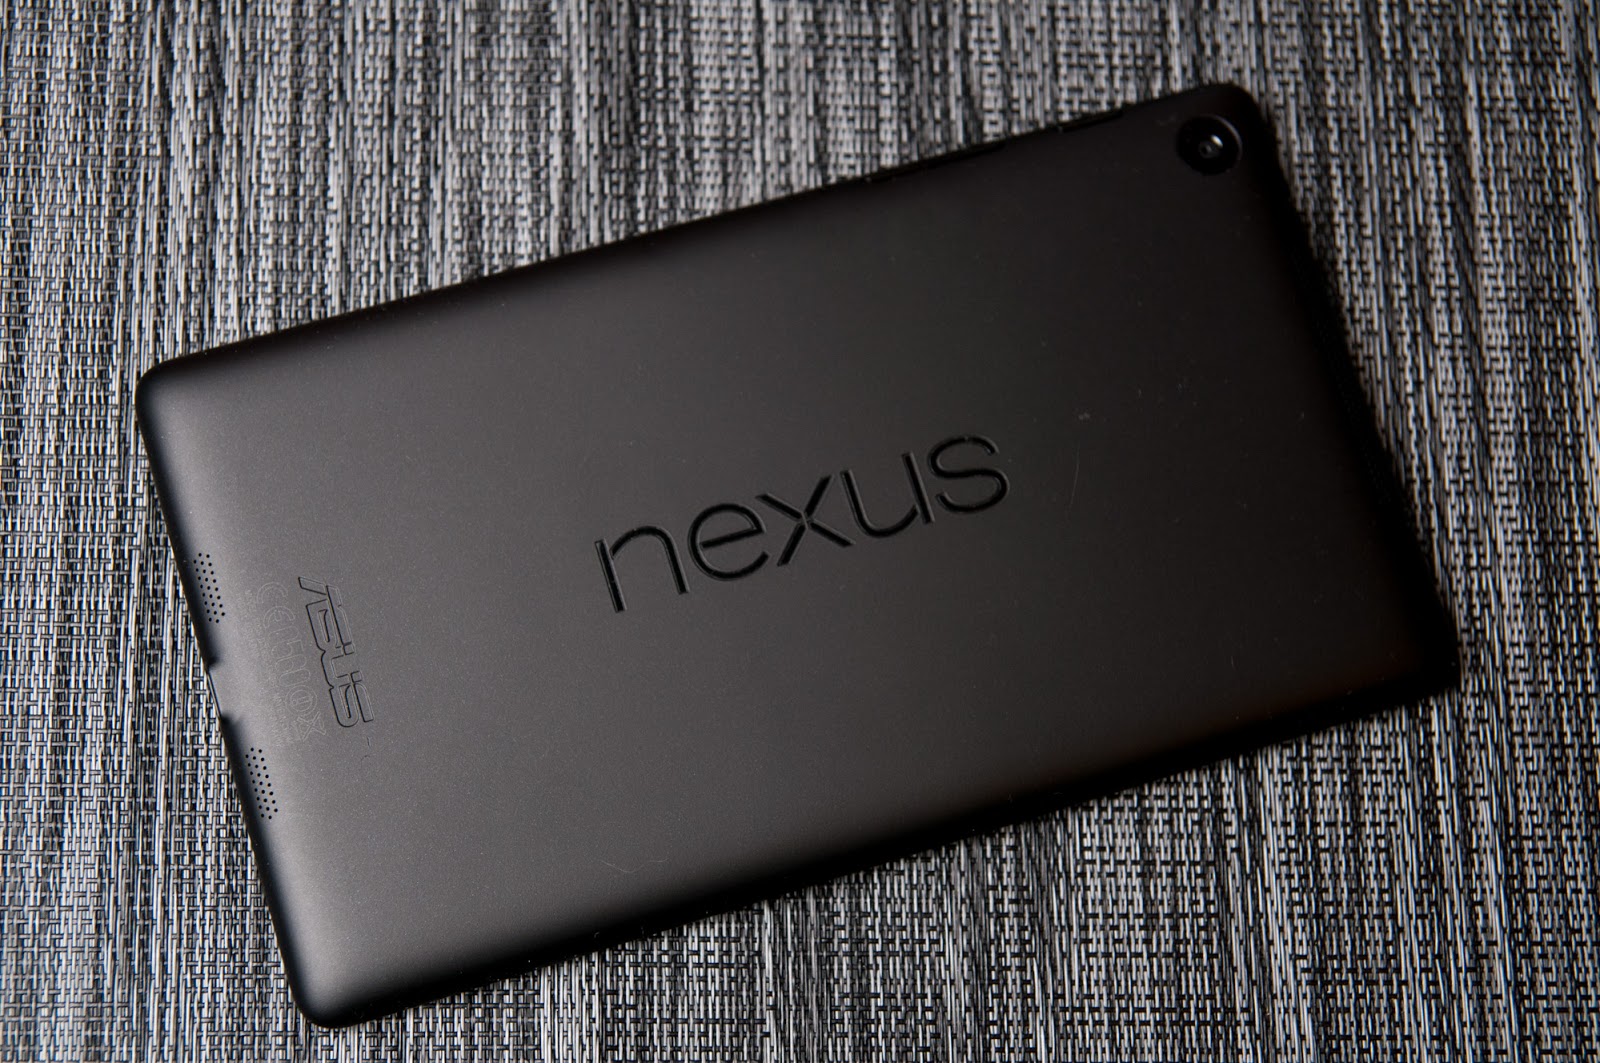 Get Latest high resolution official photos of Google Nexus 7